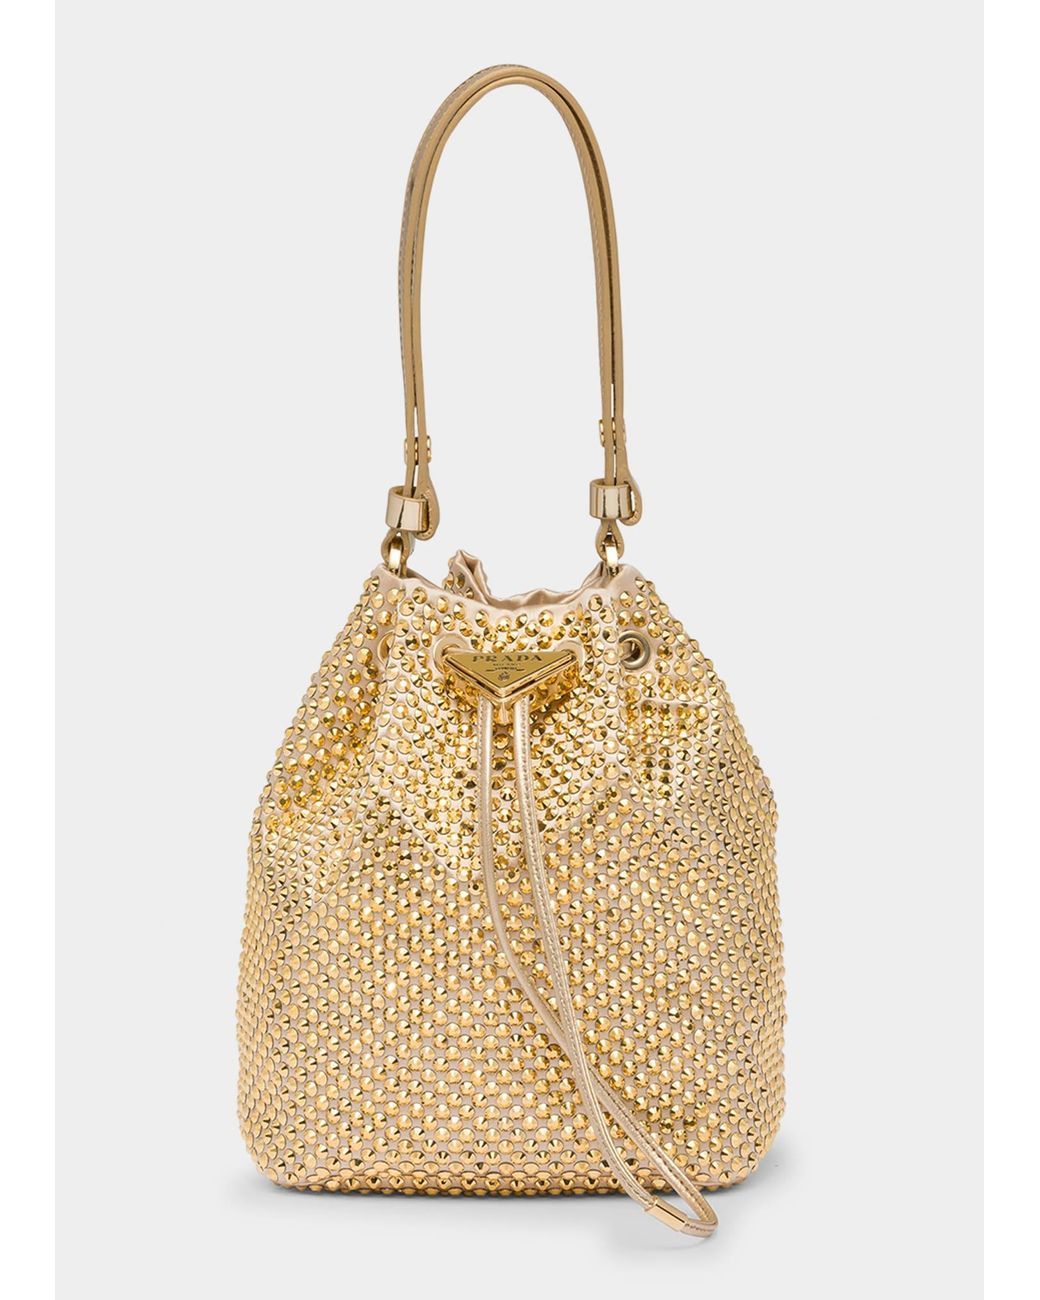 PRADA, Crystal Embellished Re-Edition Bag, Women, Gold F0522